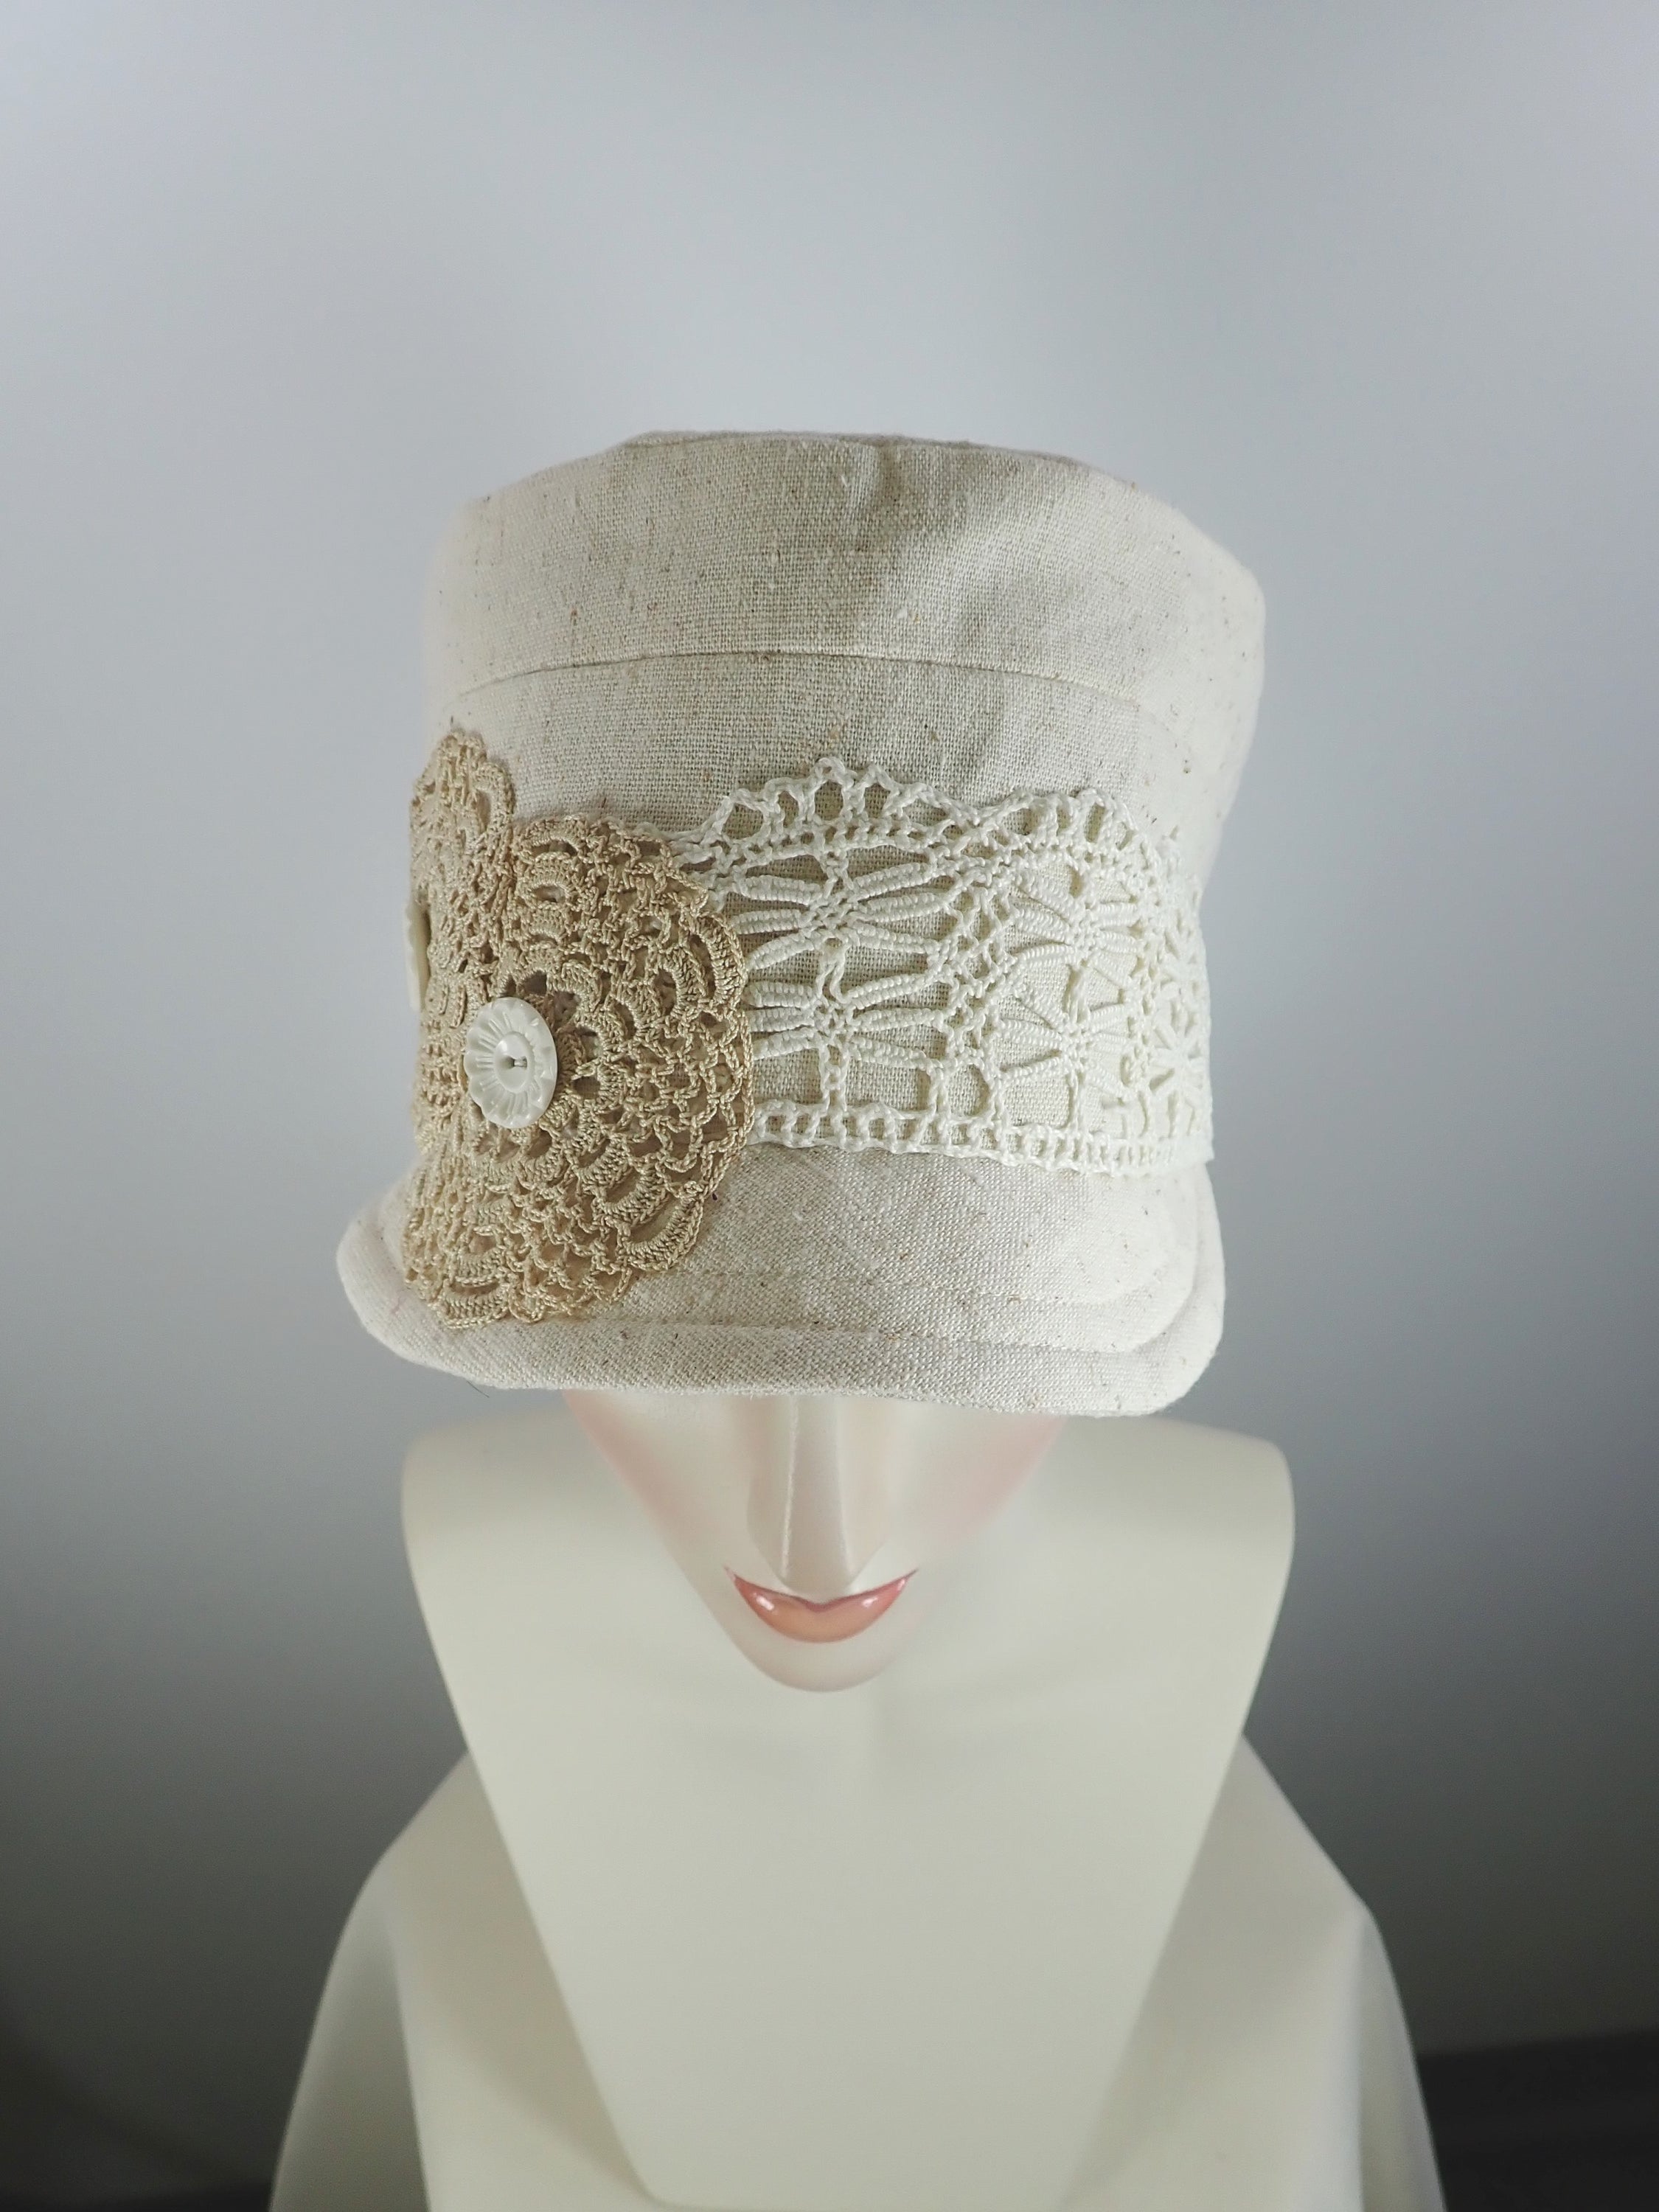 Womens Summer Cream Nubby Woven Fabric Military Newsboy Cap - Womens Visor Travel Hat, Summer Cool Hat